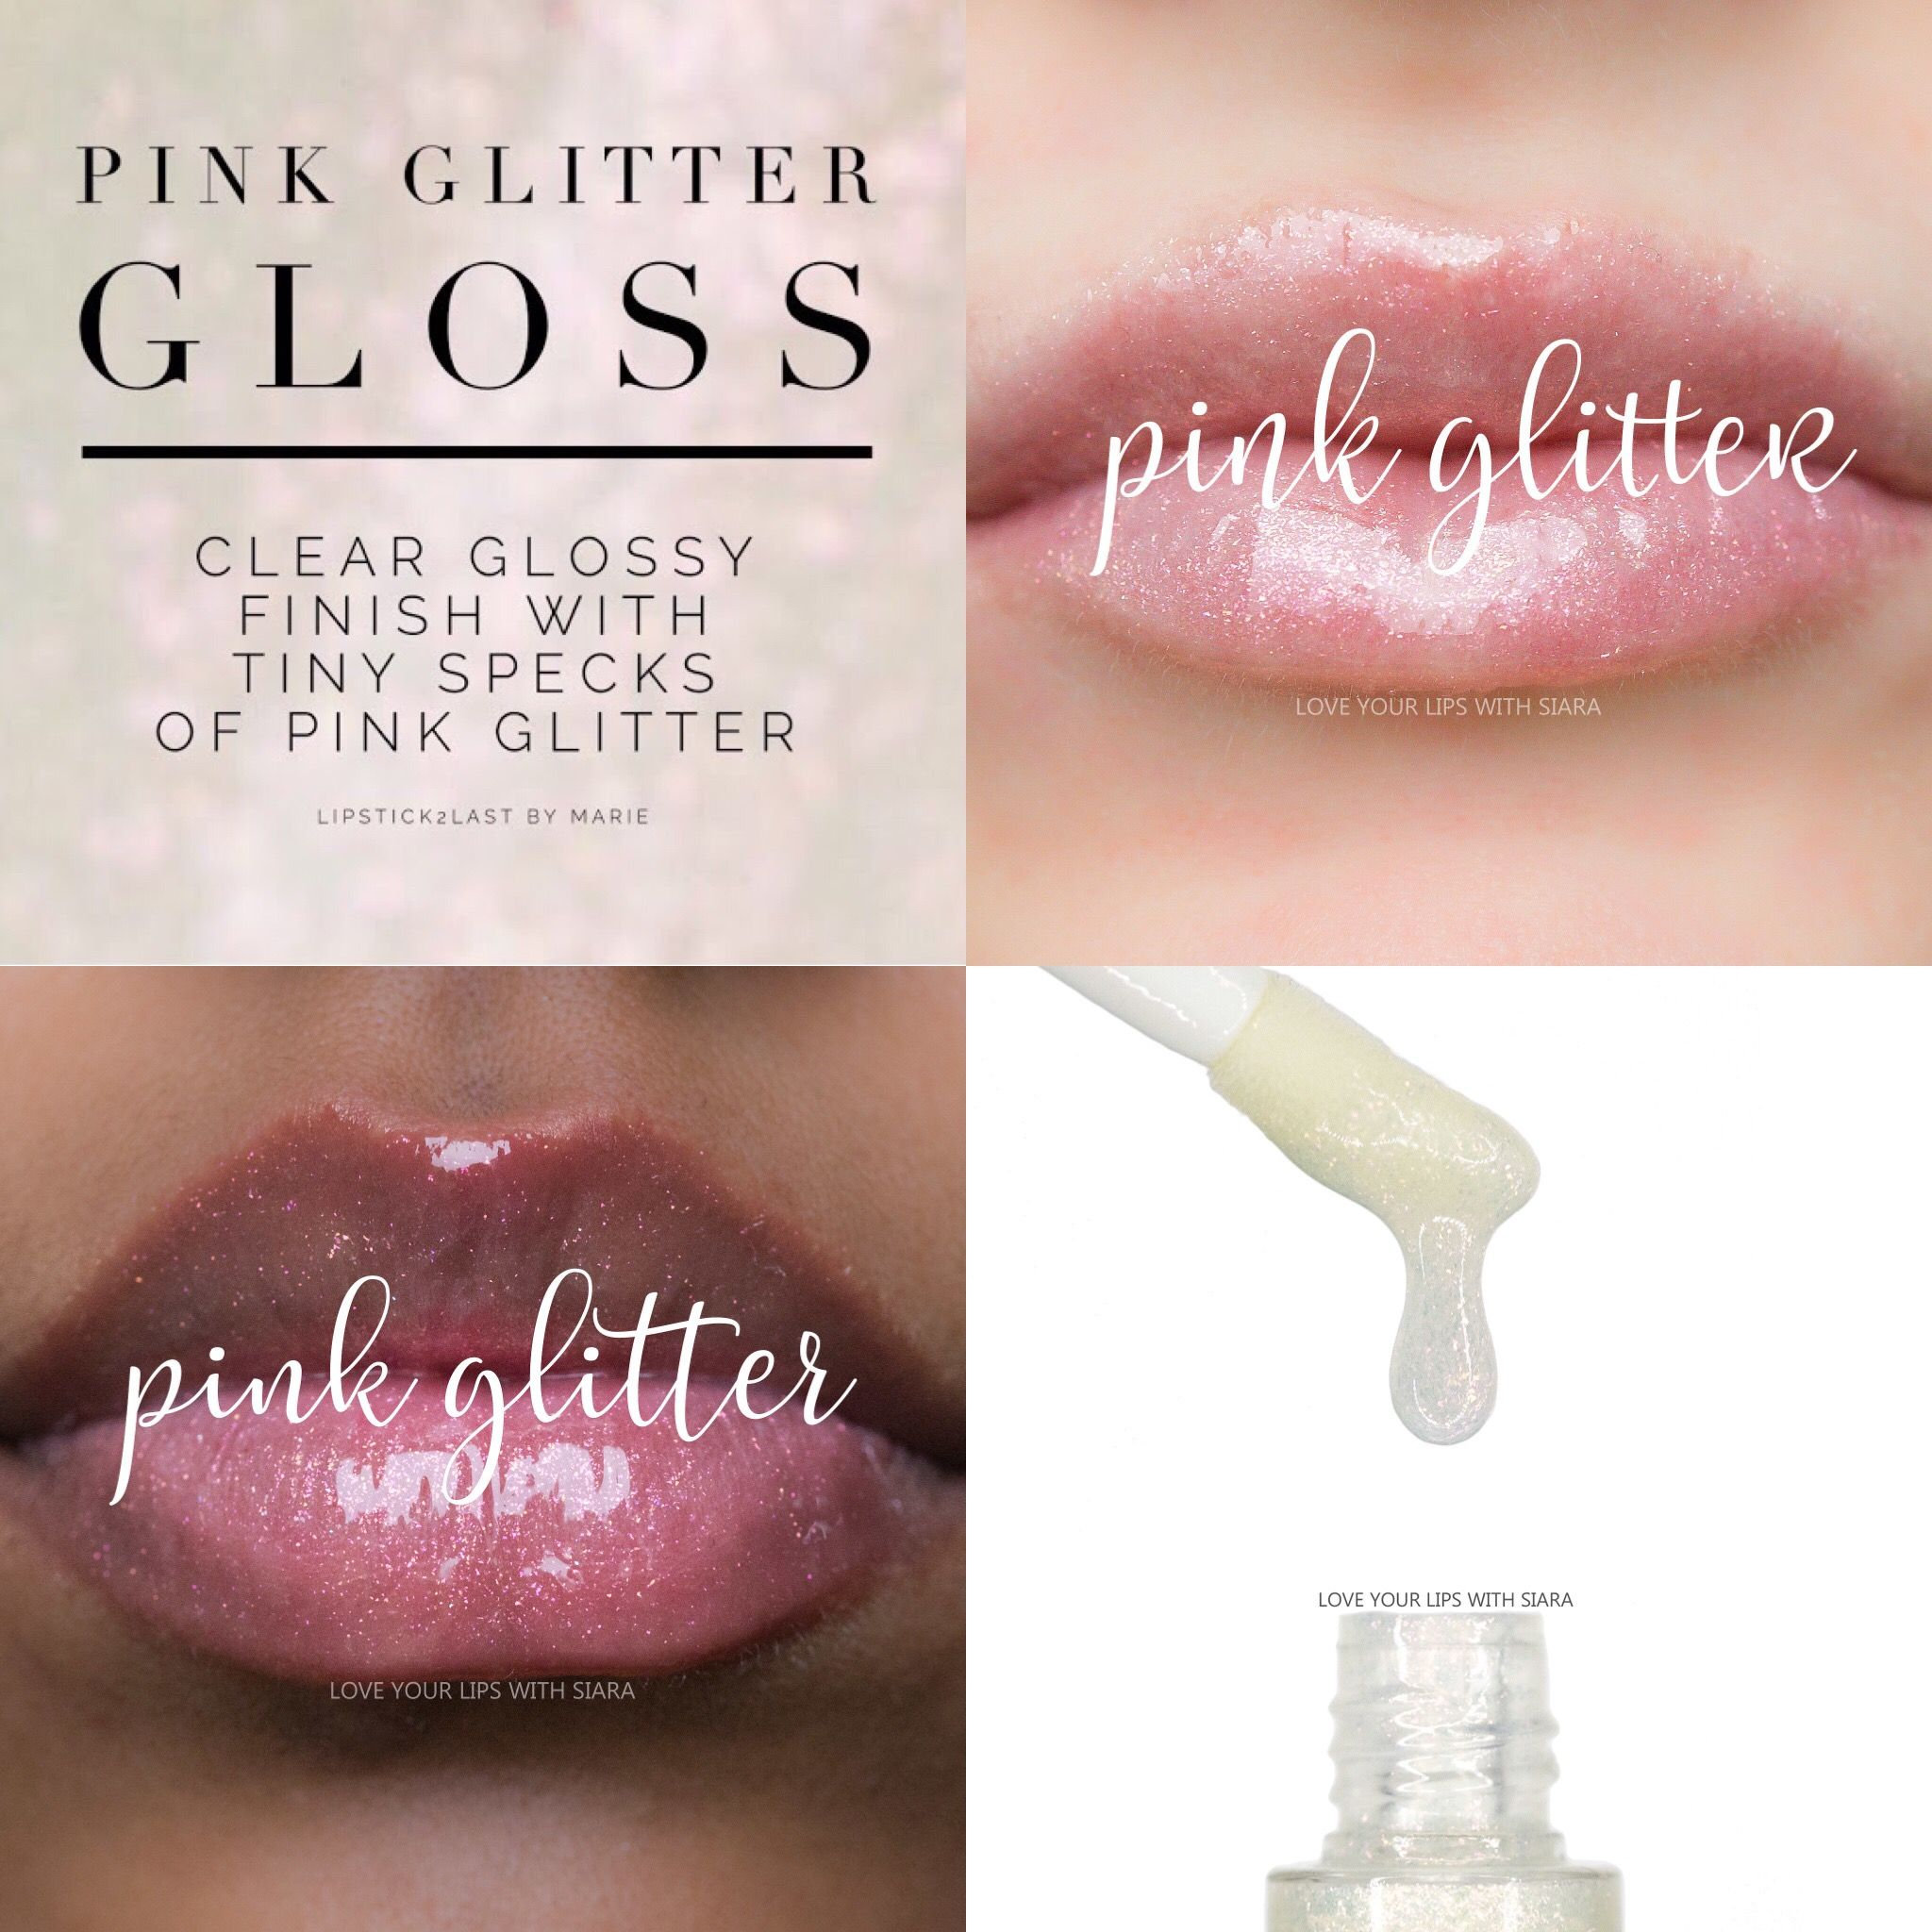 Cosmetic Grade Glitter//Unicorn Poop//Pink Glitter Mix//Solvent  Resistant//Makeup Glitter//Nail Glitter//Body Glitter//Lip Gloss Glitter